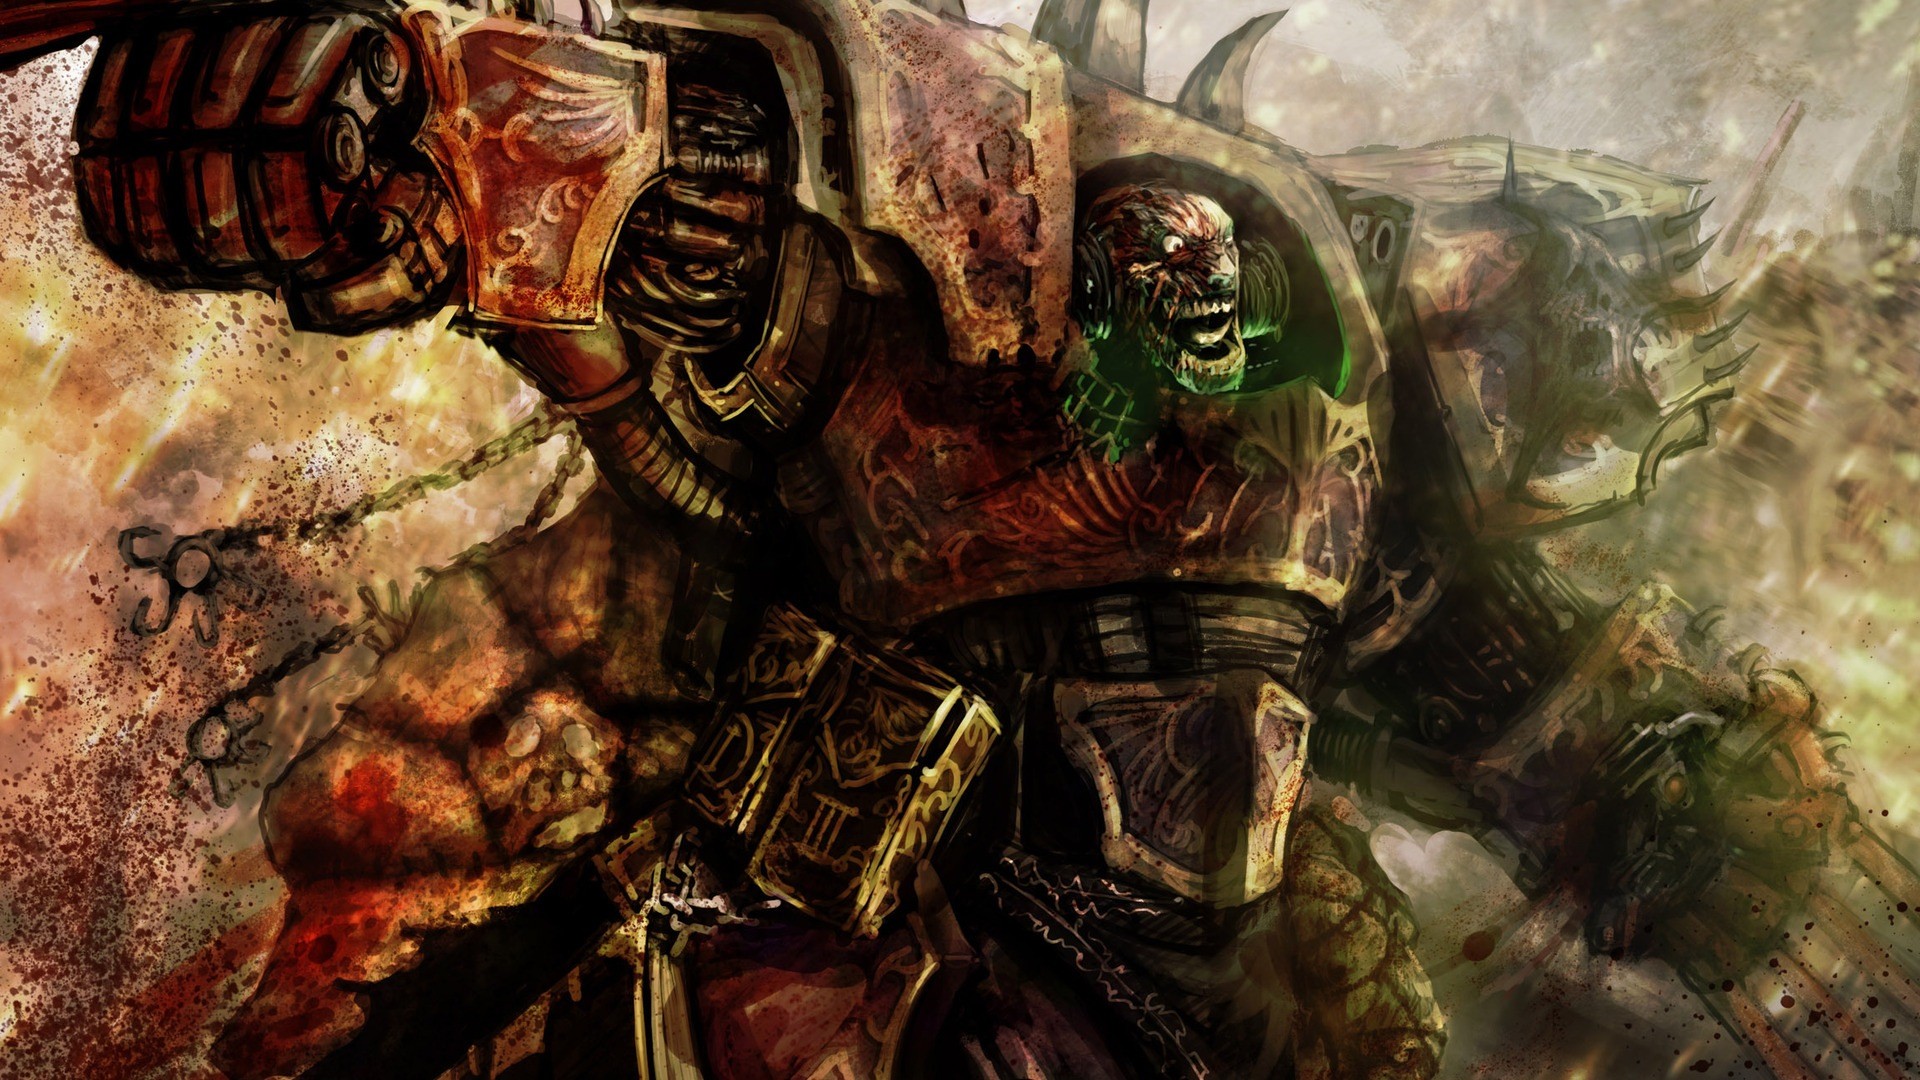 Artwork Chaos Space Marine Warhammer 40k Wallpaper Background